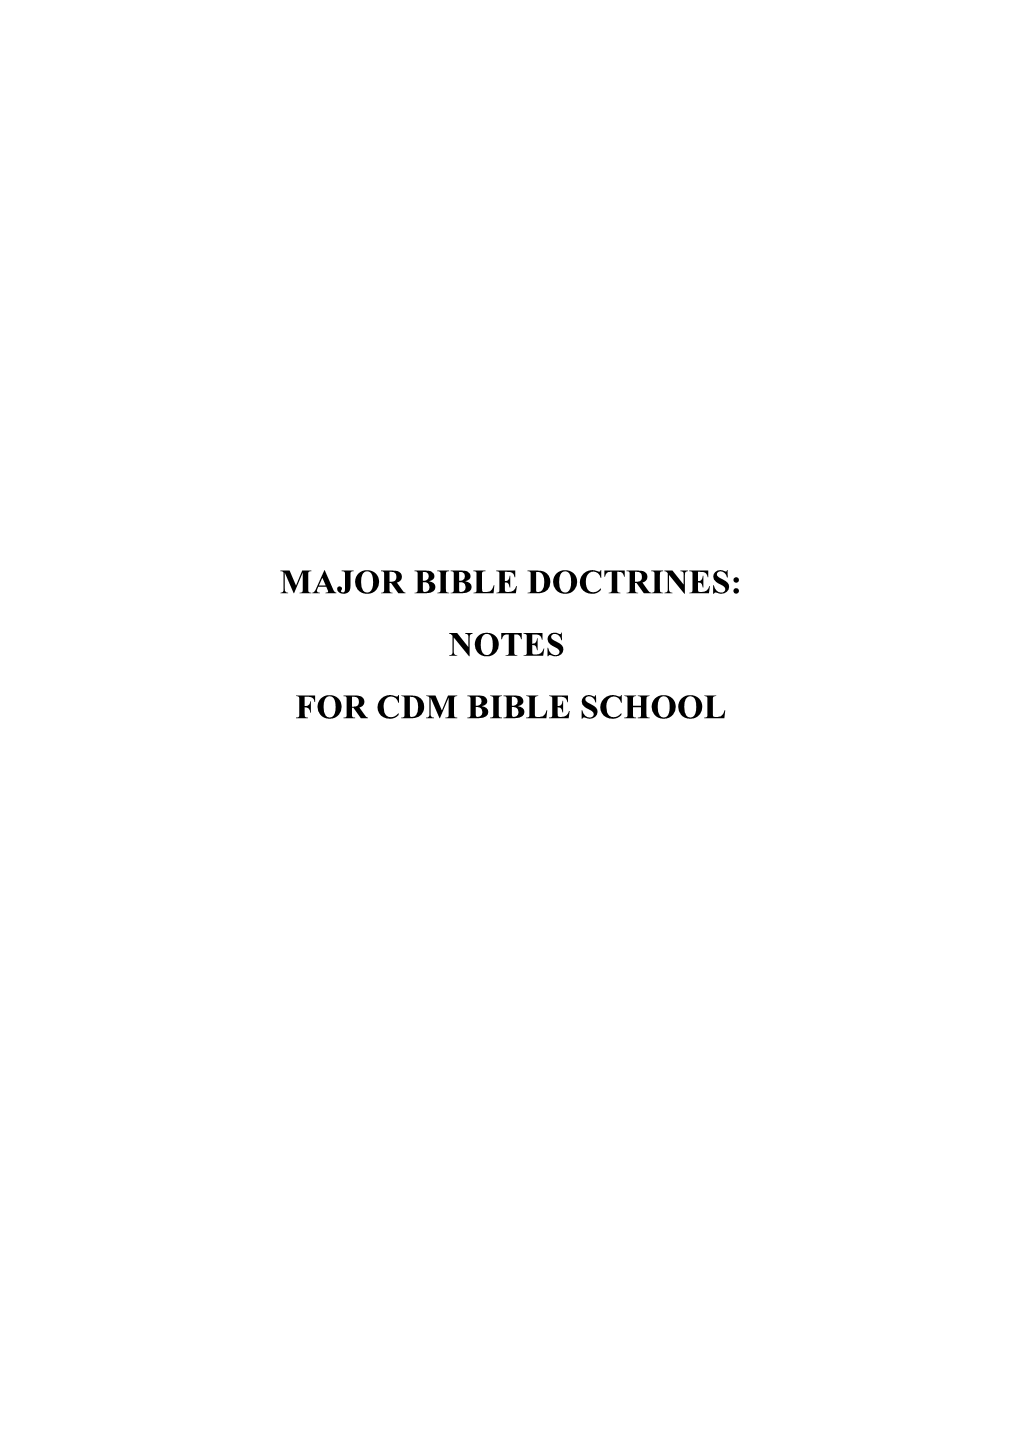 For Cdm Bible School